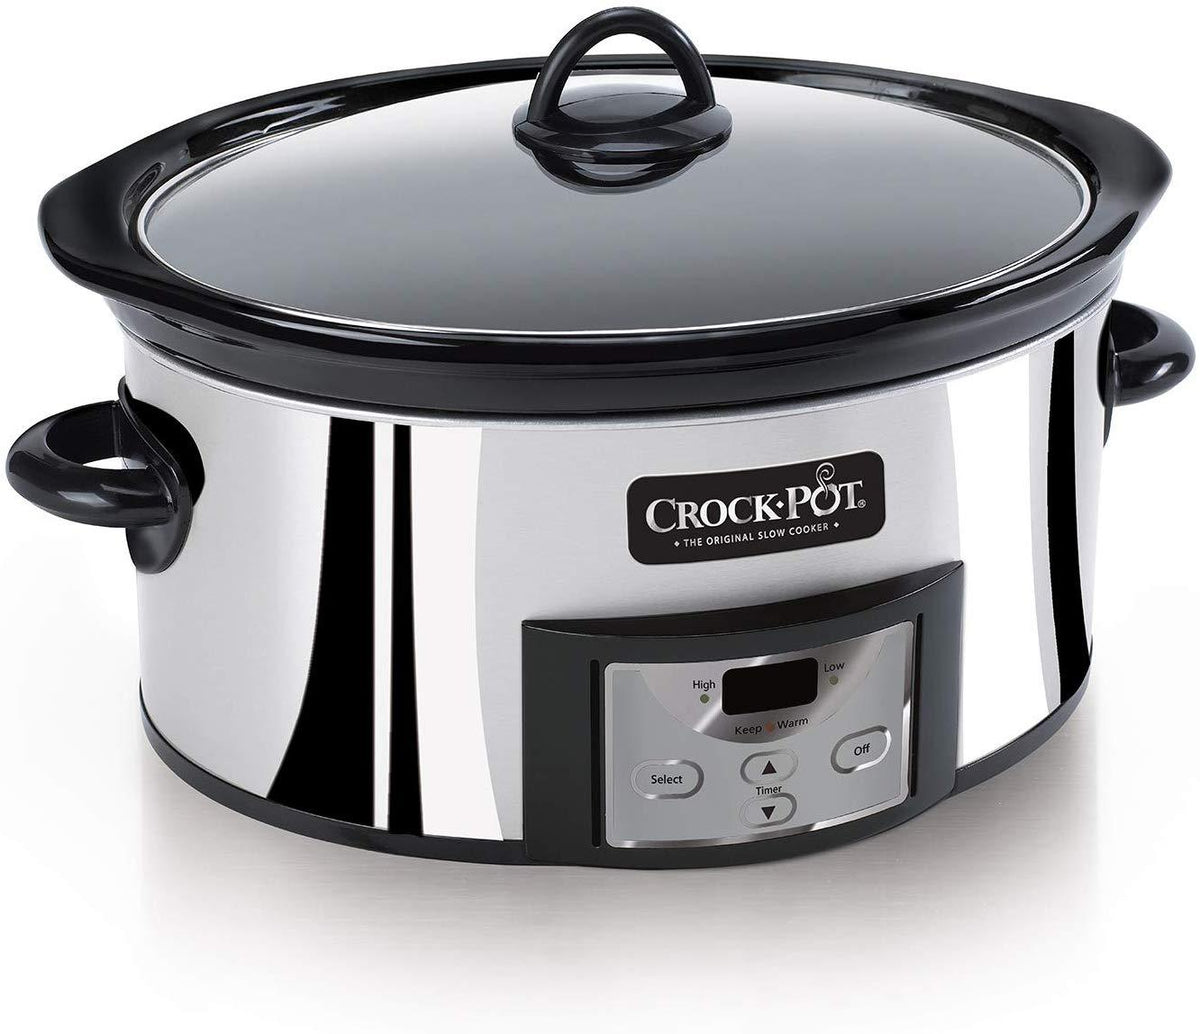 Crock-Pot Large 8 Quart Oval Manual Slow Cooker, Stainless Steel (SCV800-S)